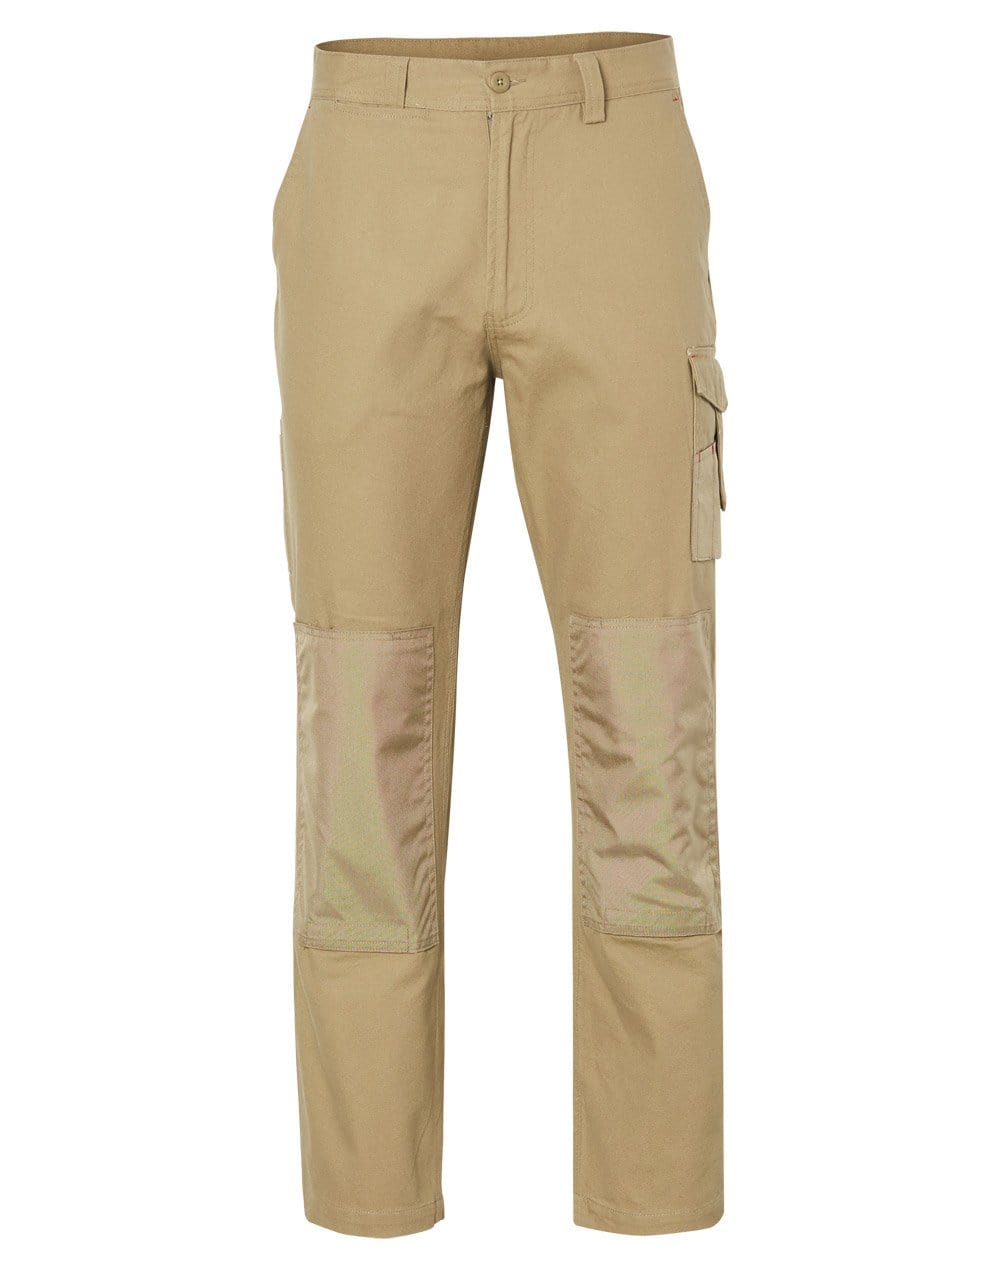 Cordura Durable Work Pants Regular Size WP09 Work Wear Australian Industrial Wear 77R Khaki 